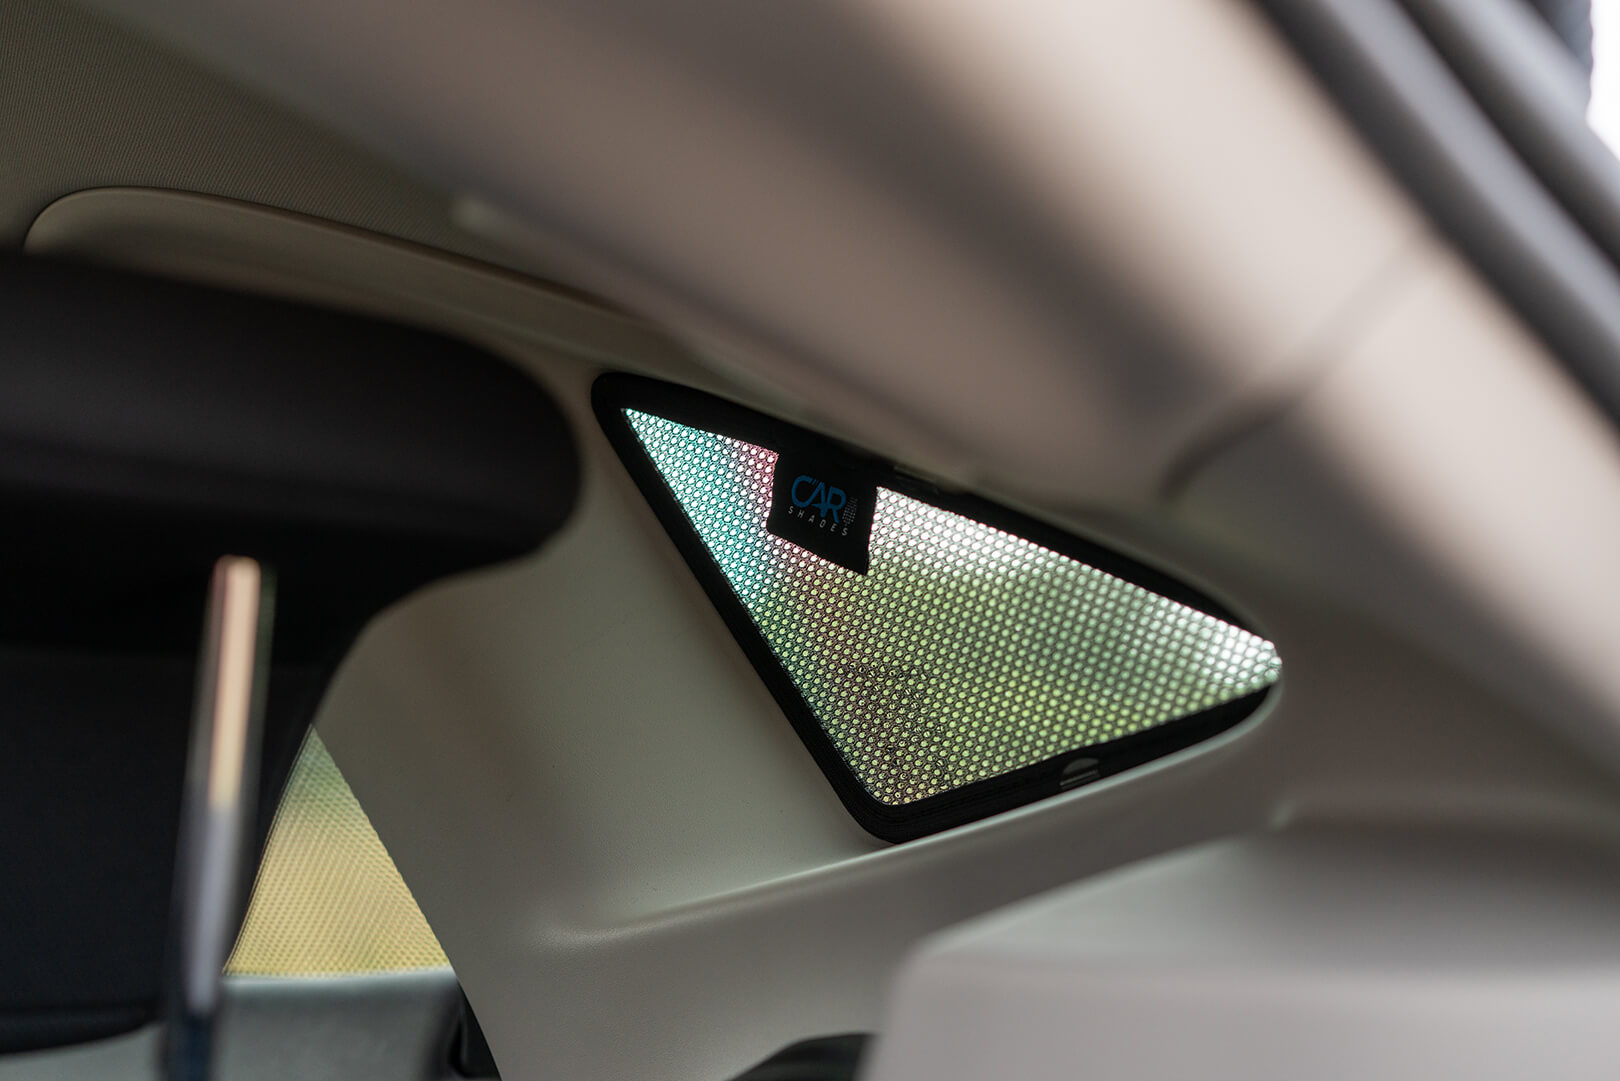 Jaguar Auto Sonnenschutz Blenden Set / Car Shades passgenau